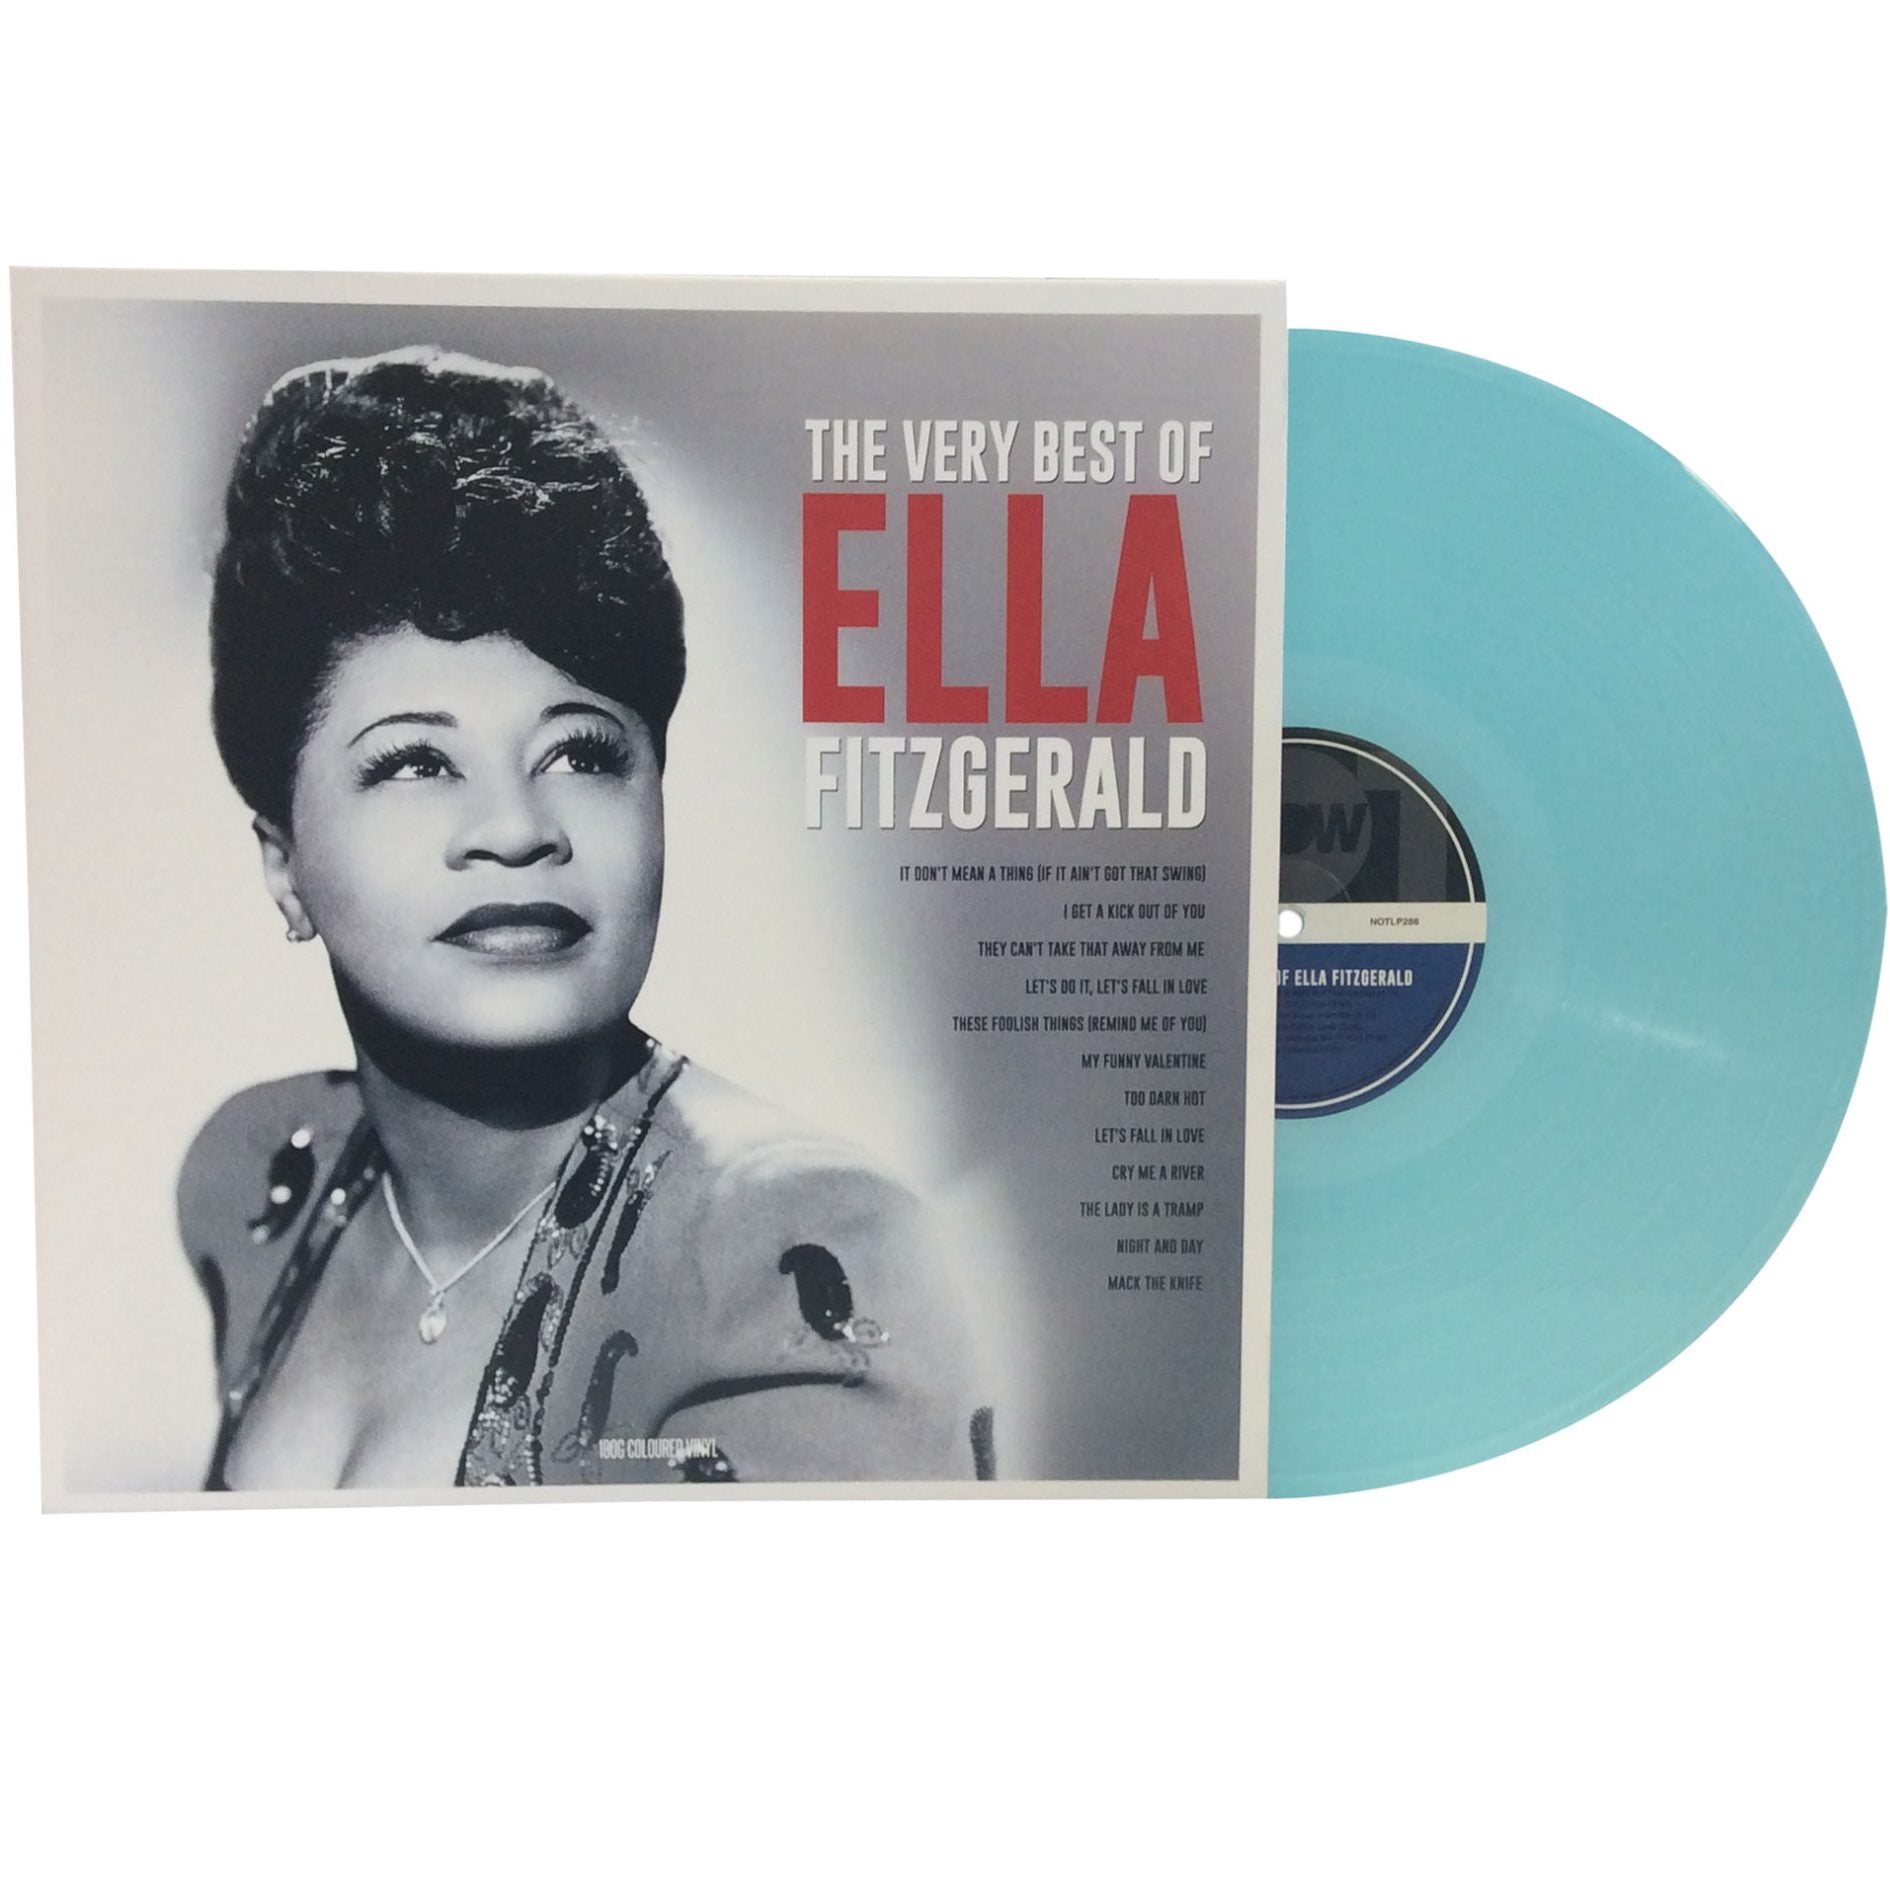 Blue Vinyl Records - Find Colored Vinyl